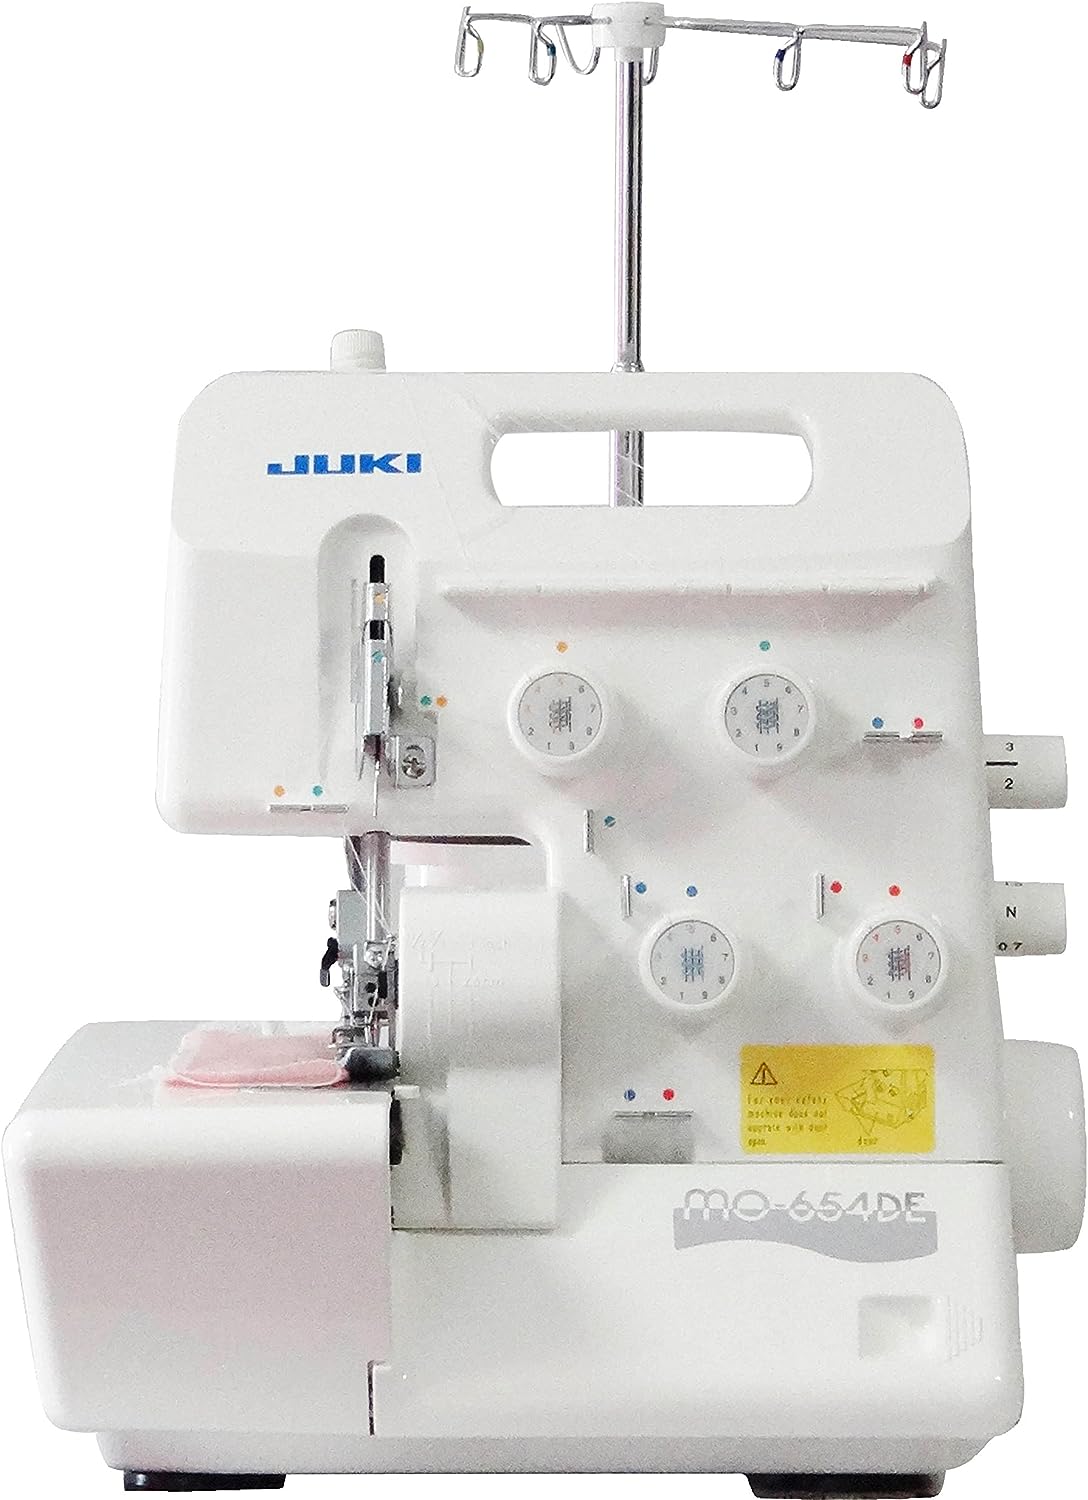 JUKI MO654DE Serger Sewing Machine review